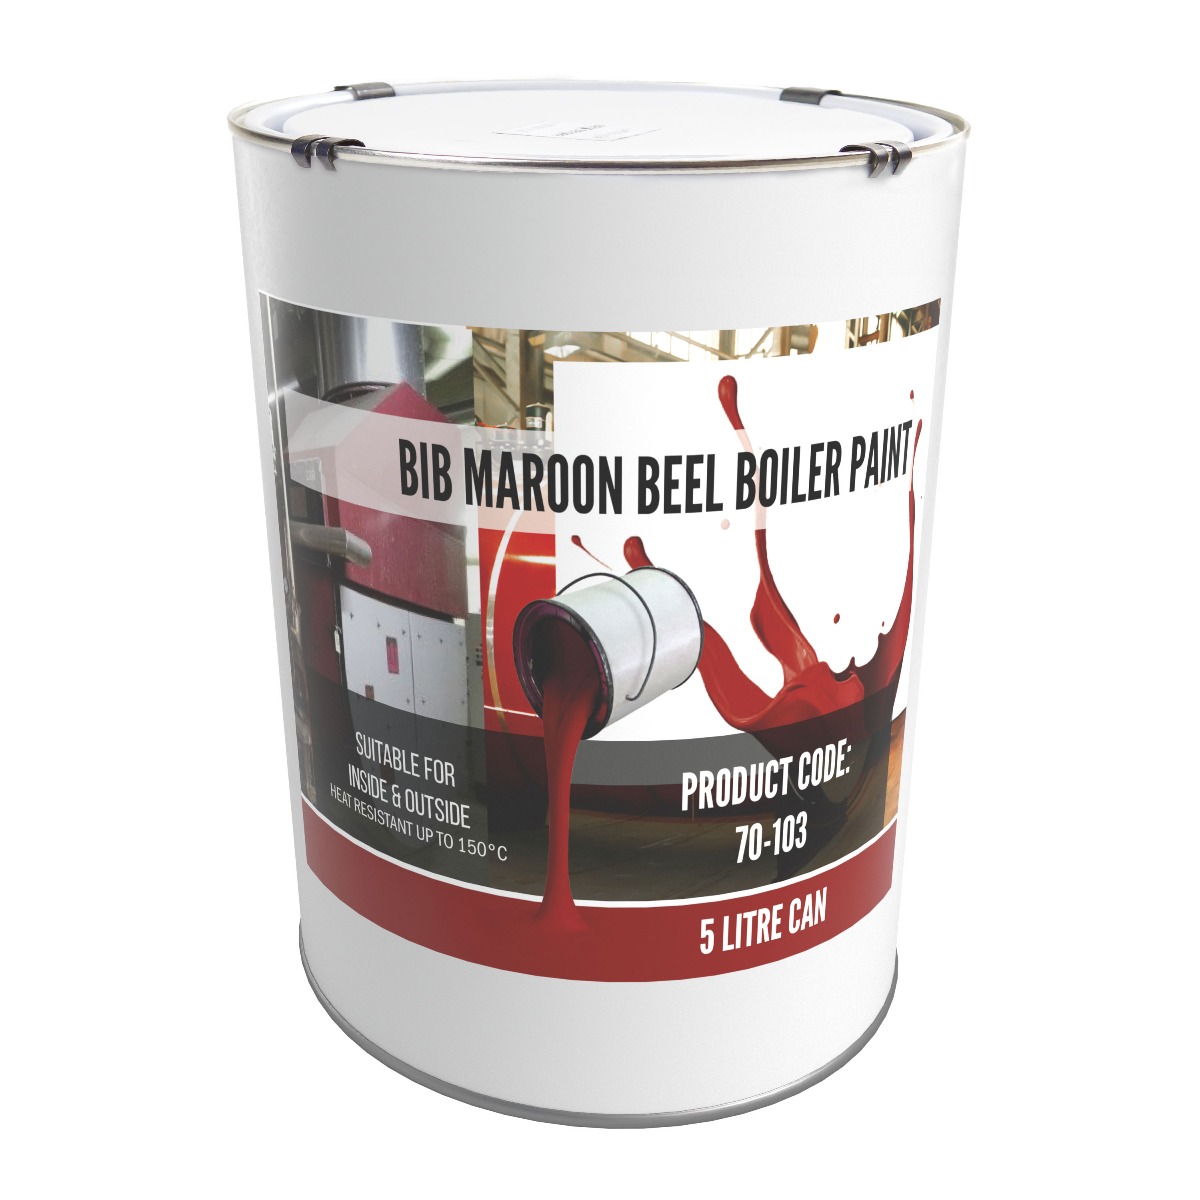 BIB Maroon Beel Boiler Paint - 5 Ltr 150°C